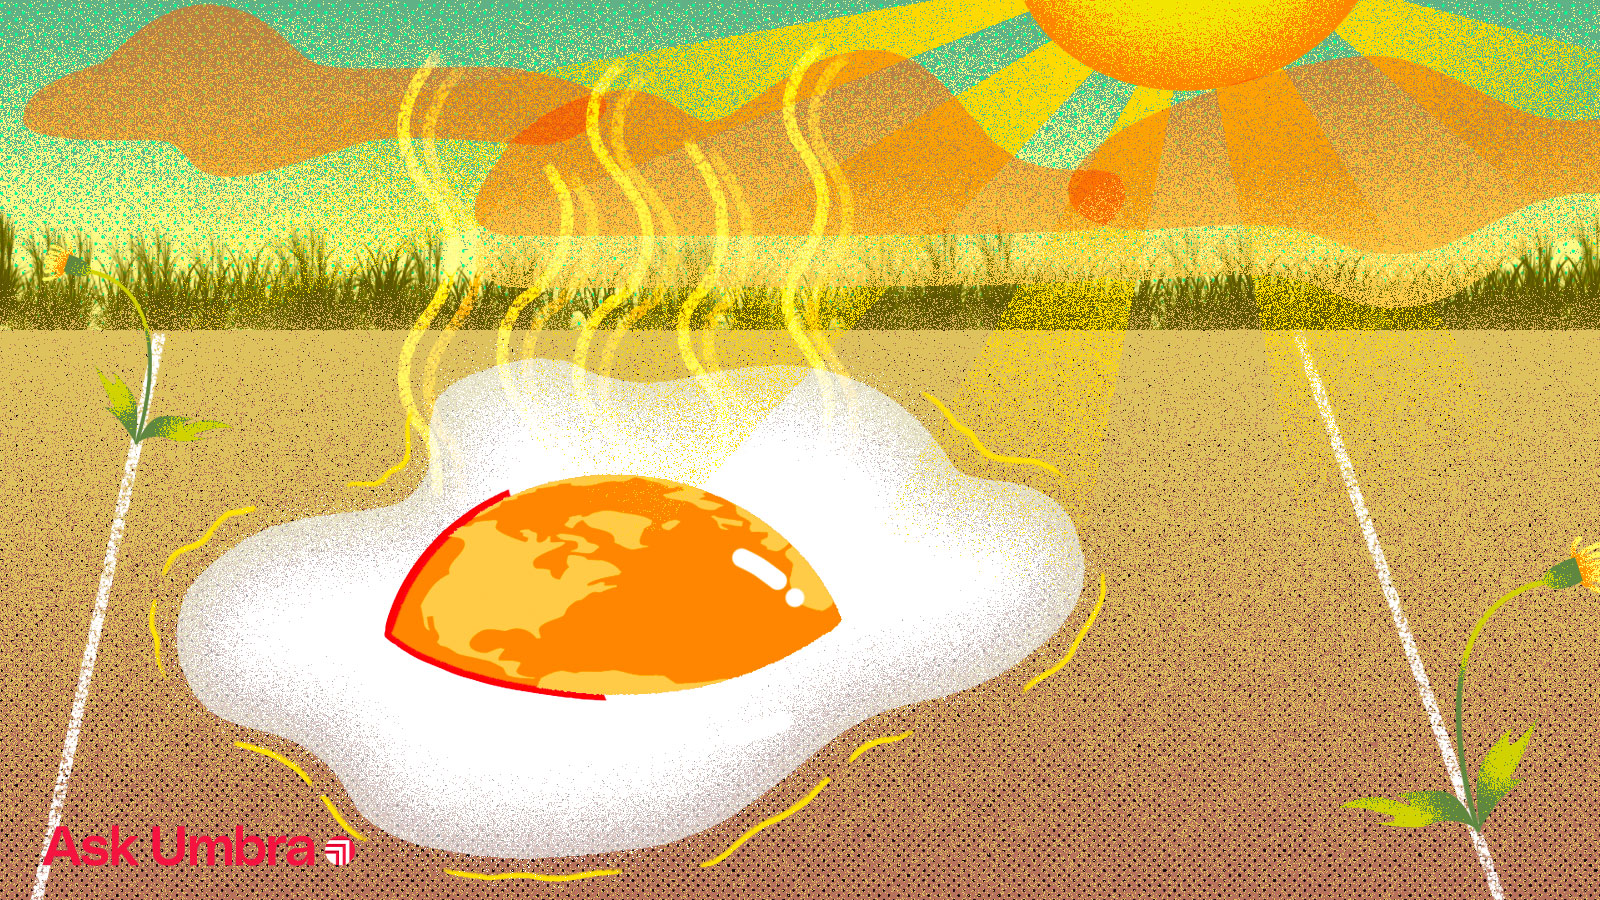 Illustration: an egg cooking on a sidewalk